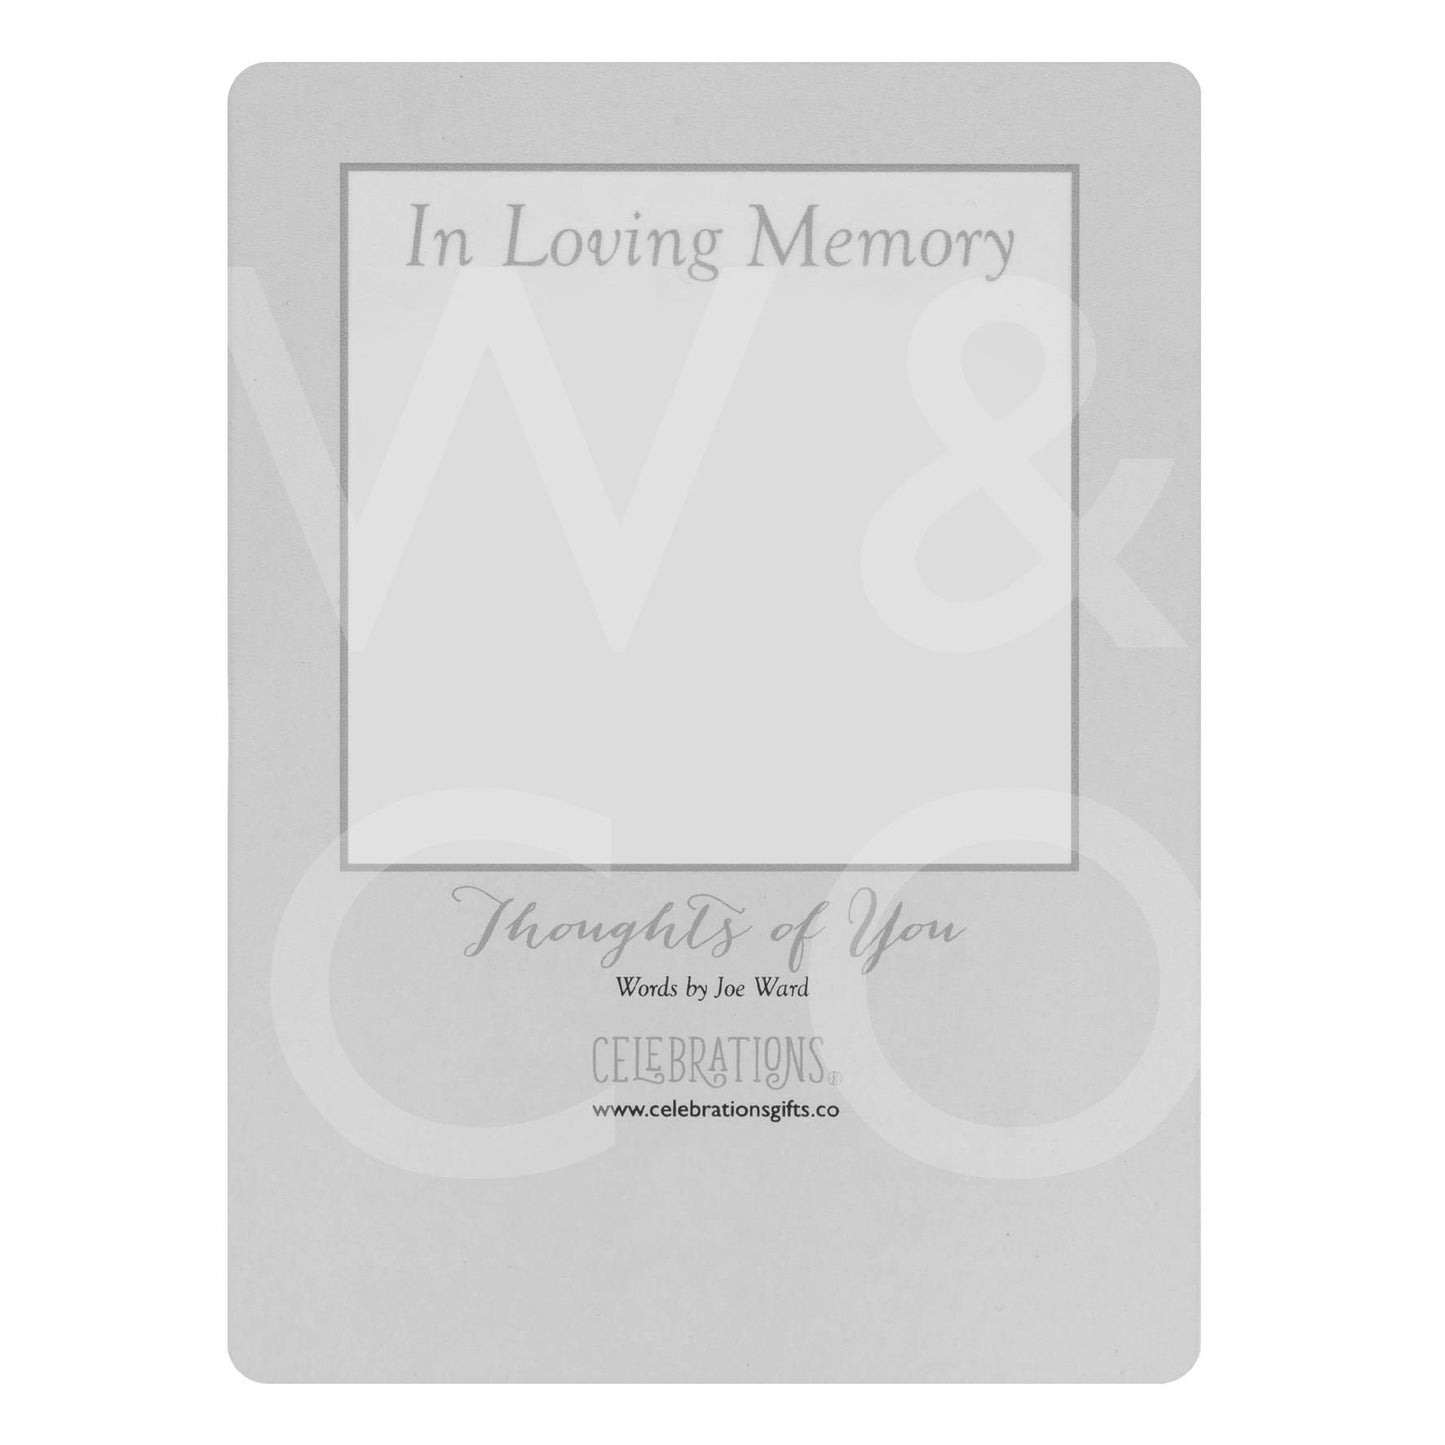 Graveside Memorial Cards - Loving Memory Of Dad